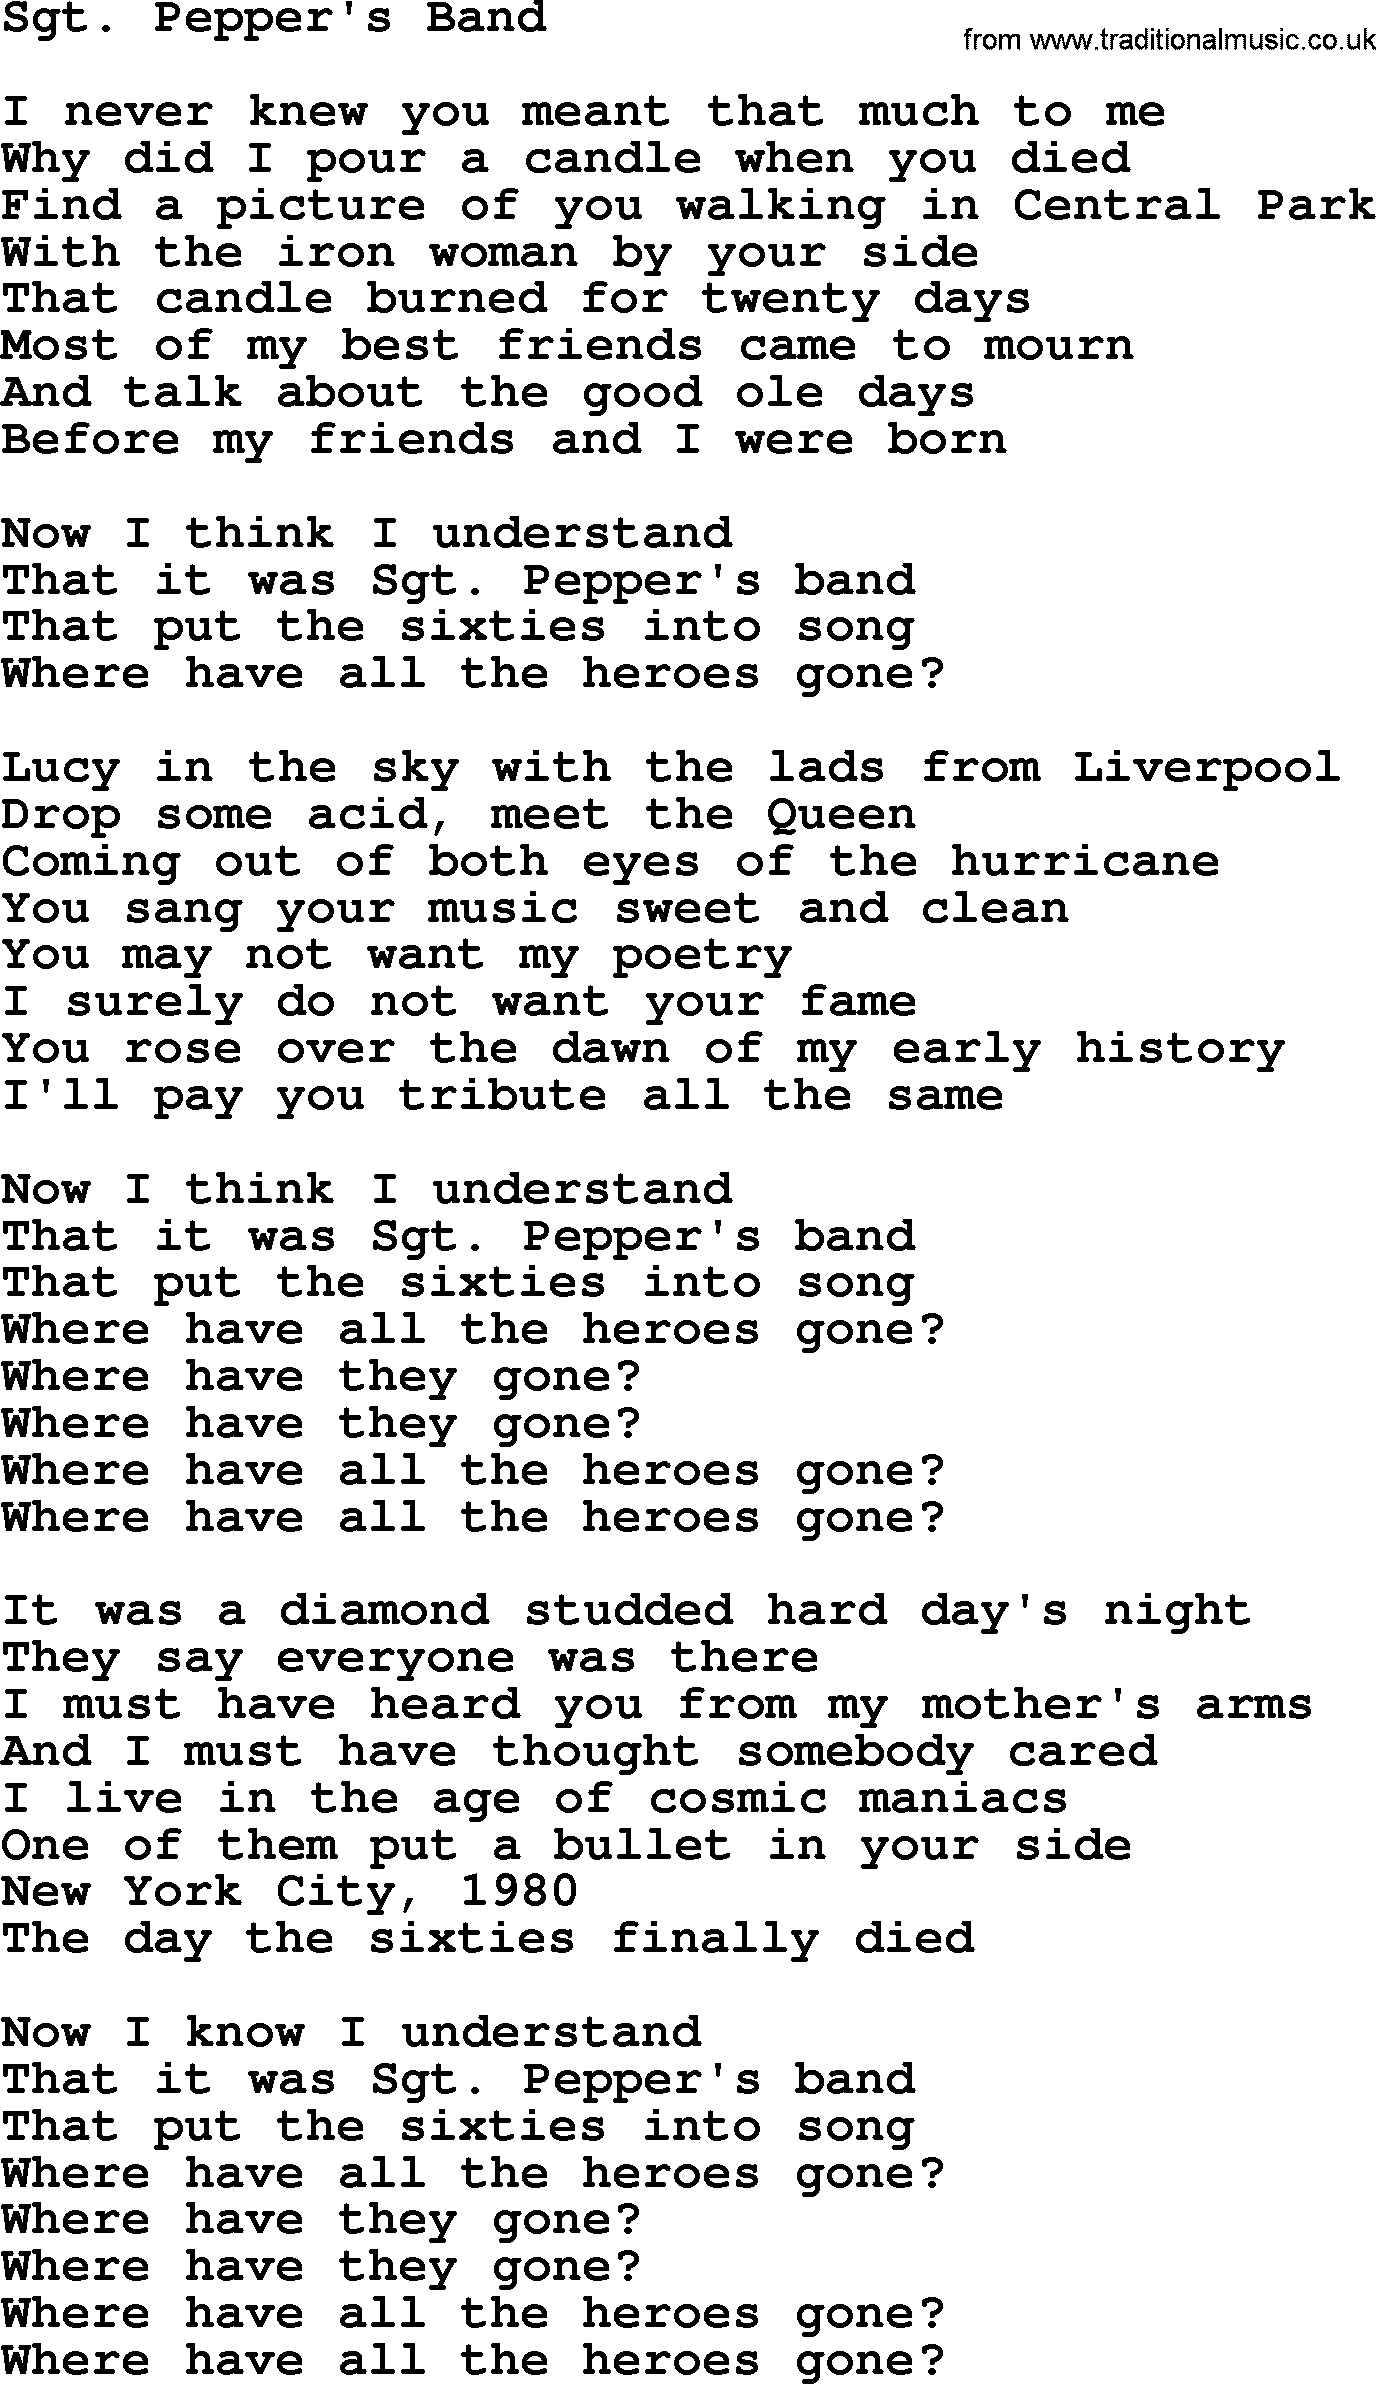 Joan Baez song Sgt Pepper's Band, lyrics